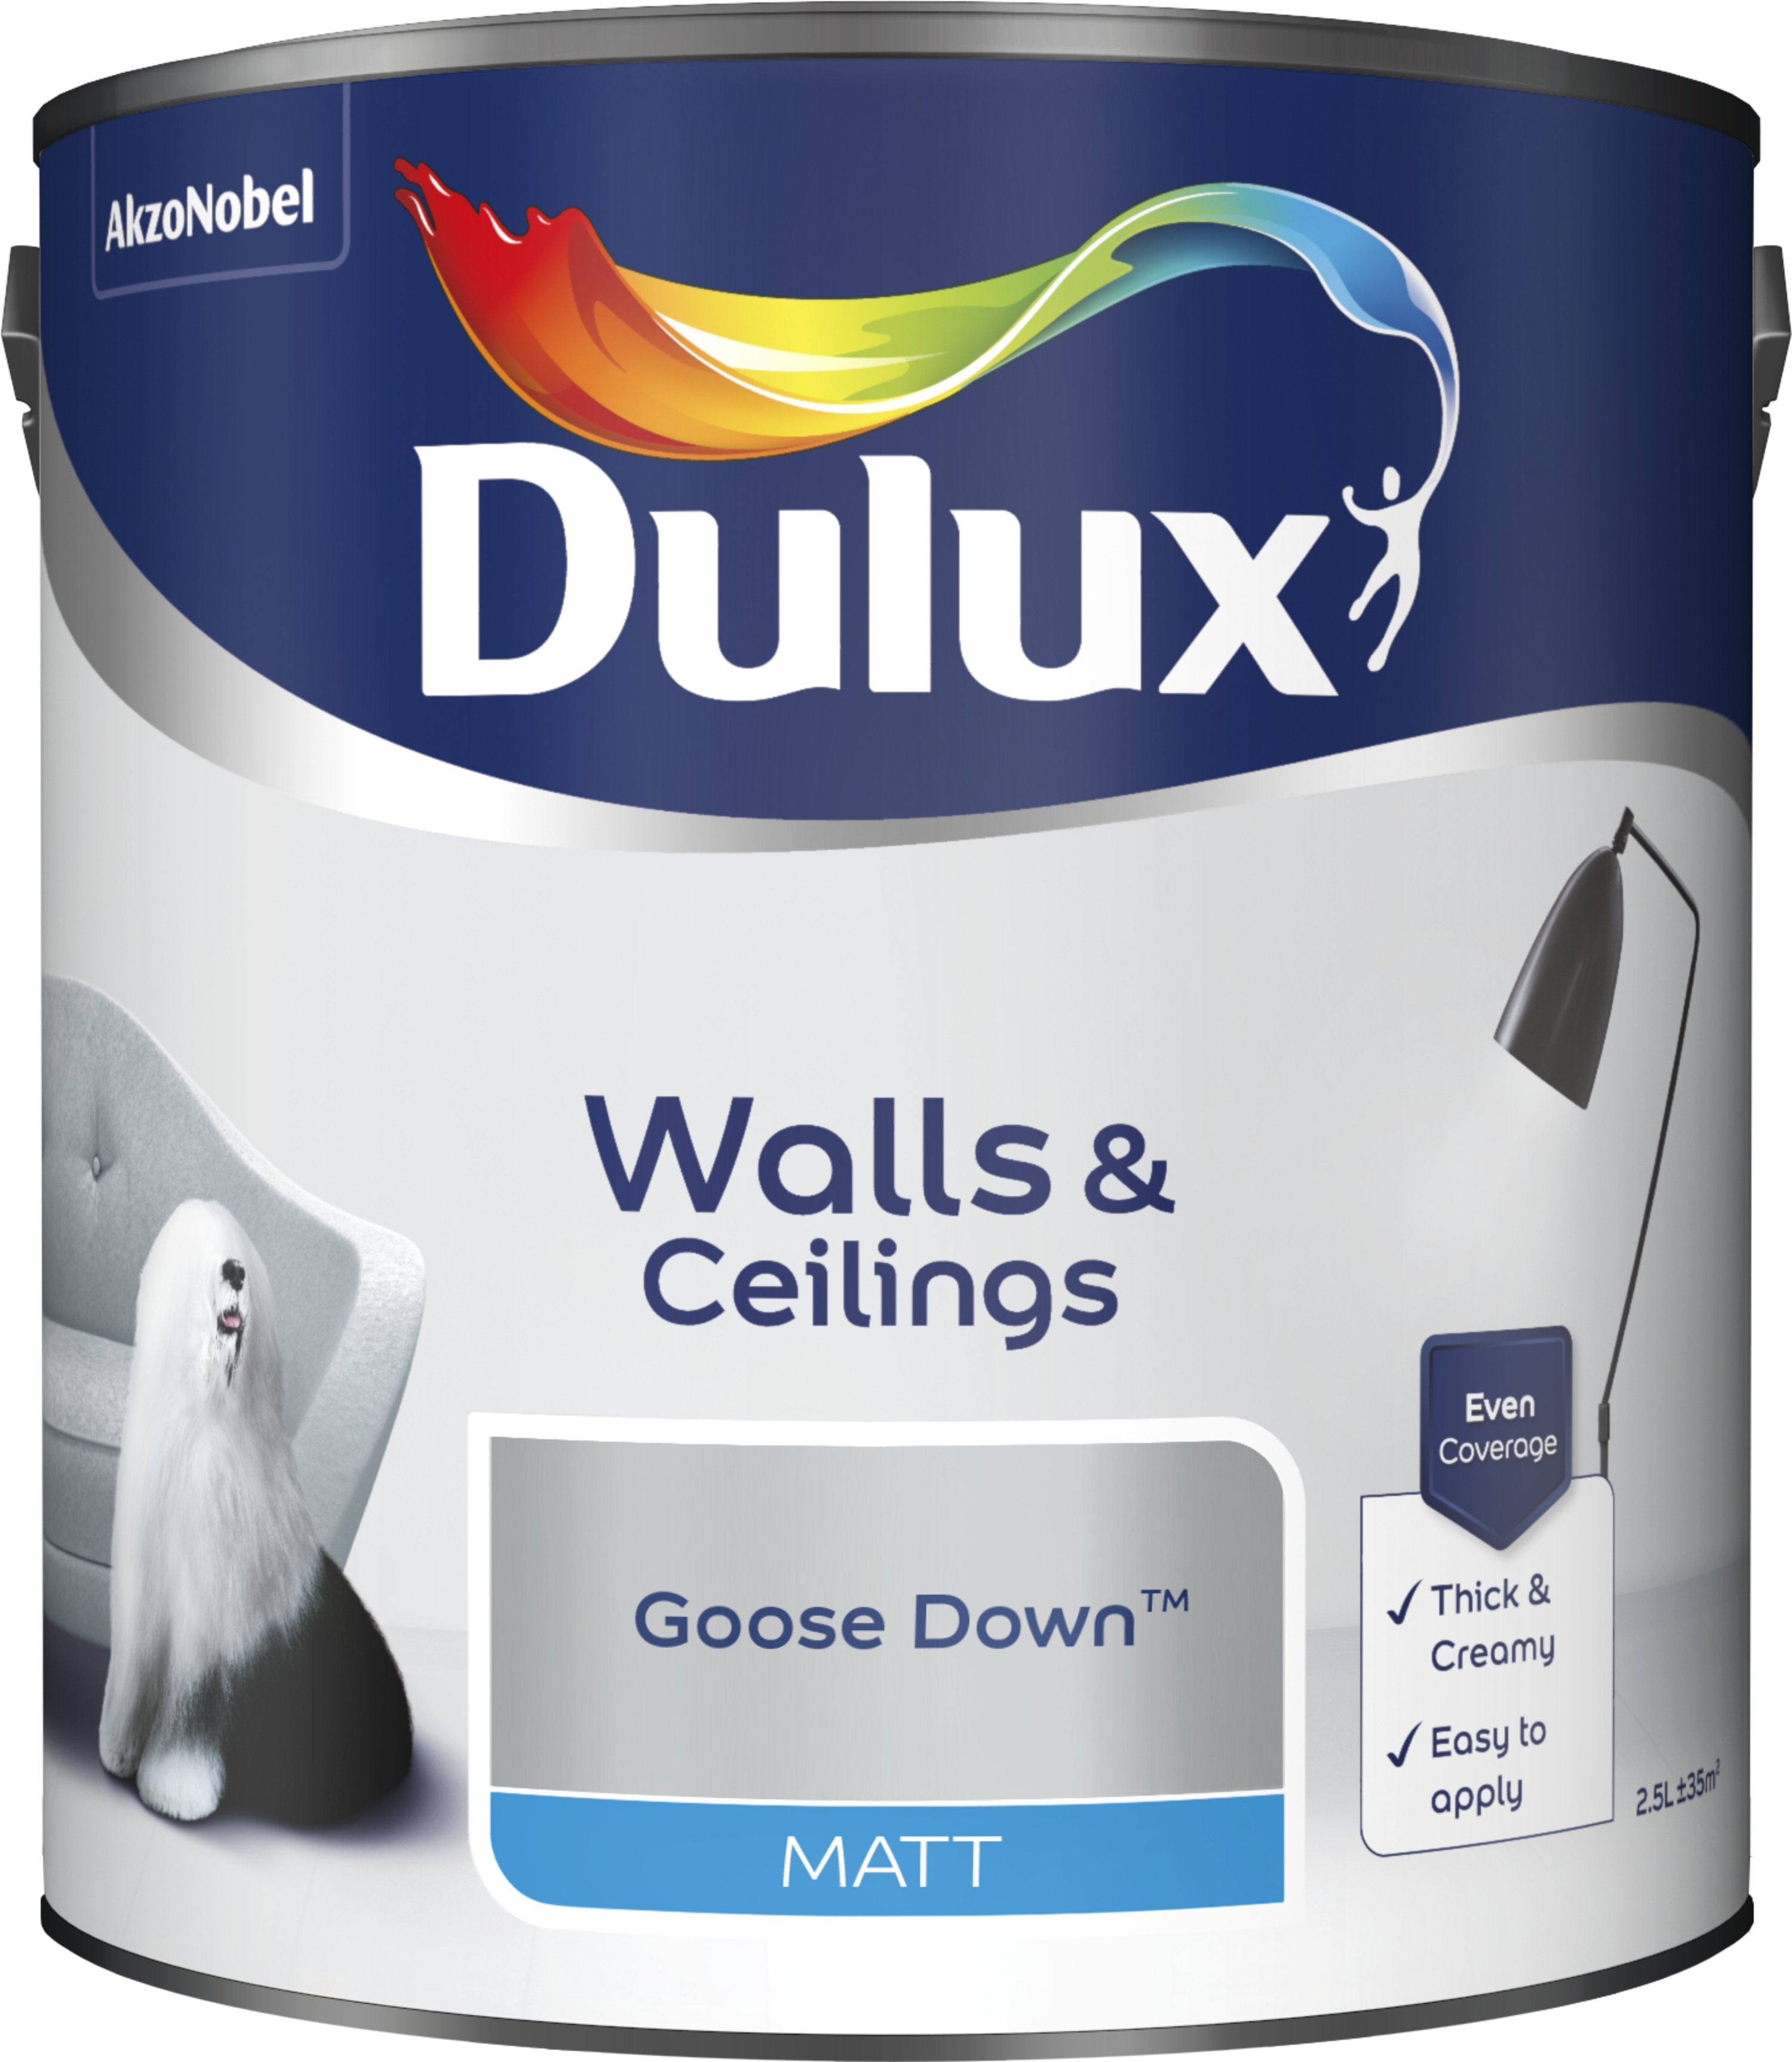 Dulux Matt Emulsion Paint For Walls And Ceilings - Goose Down 2.5L Garden & Diy  Home Improvements  